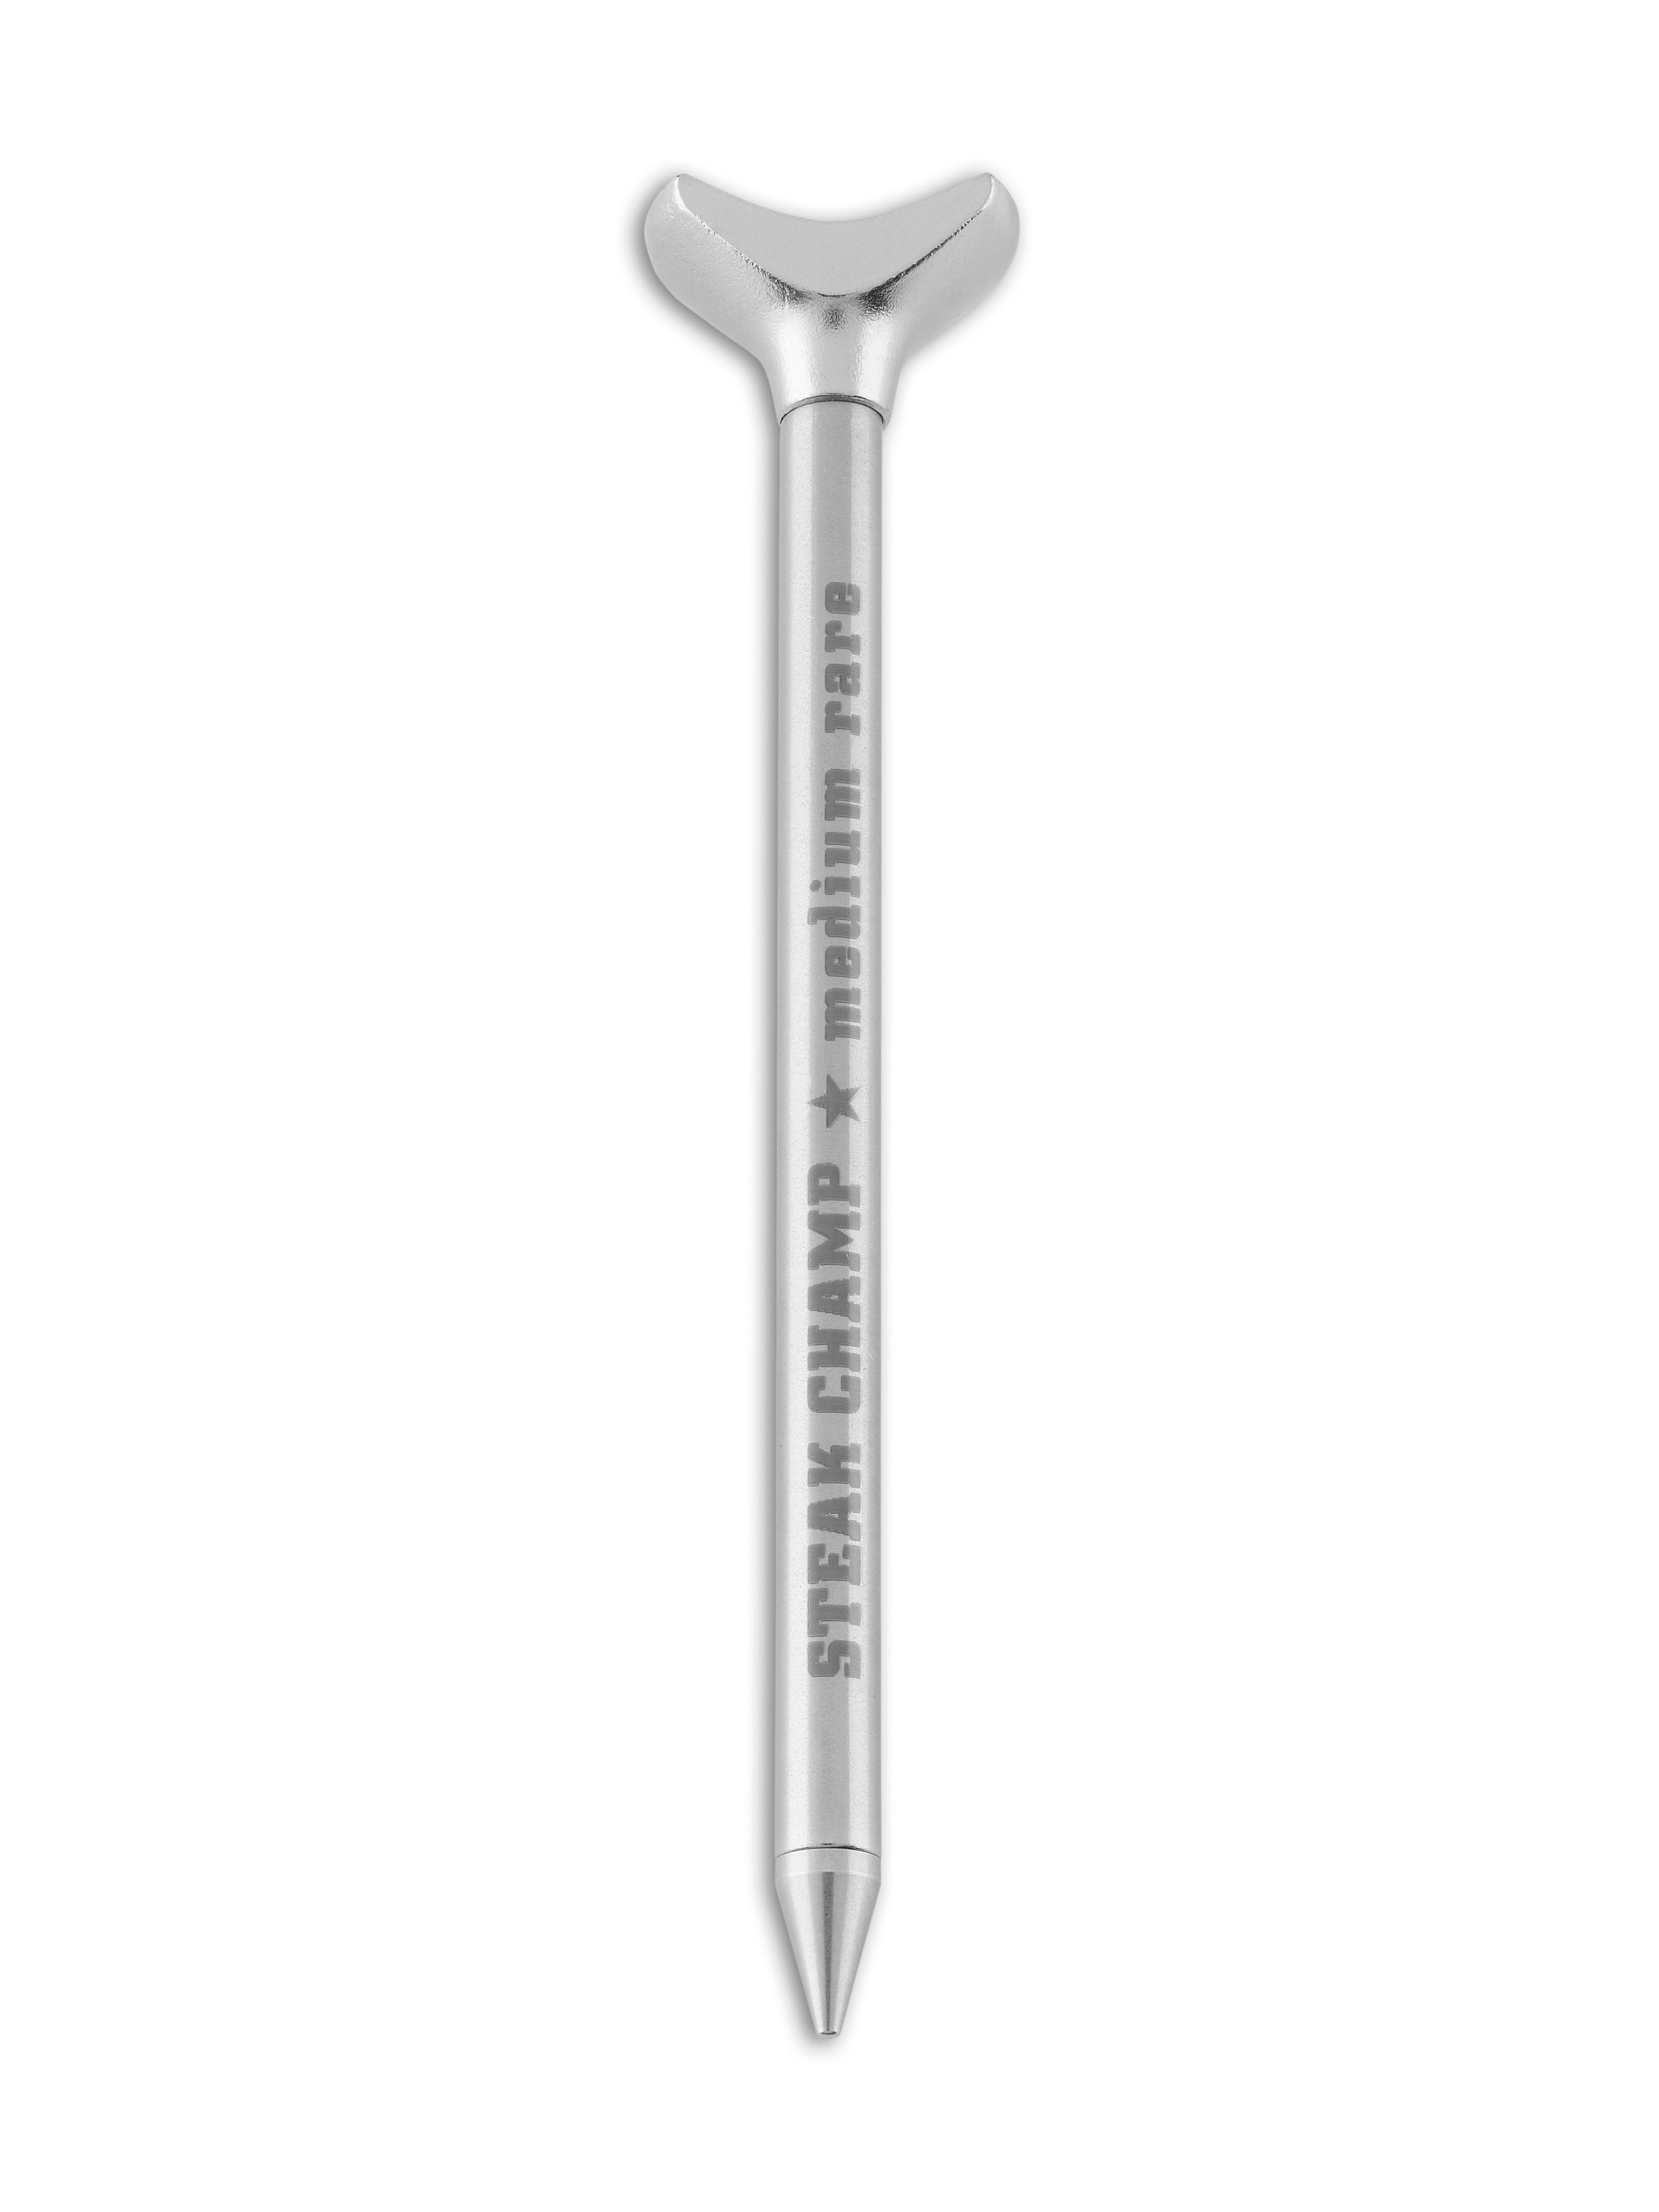 SteakChamp Thermometer - medium well